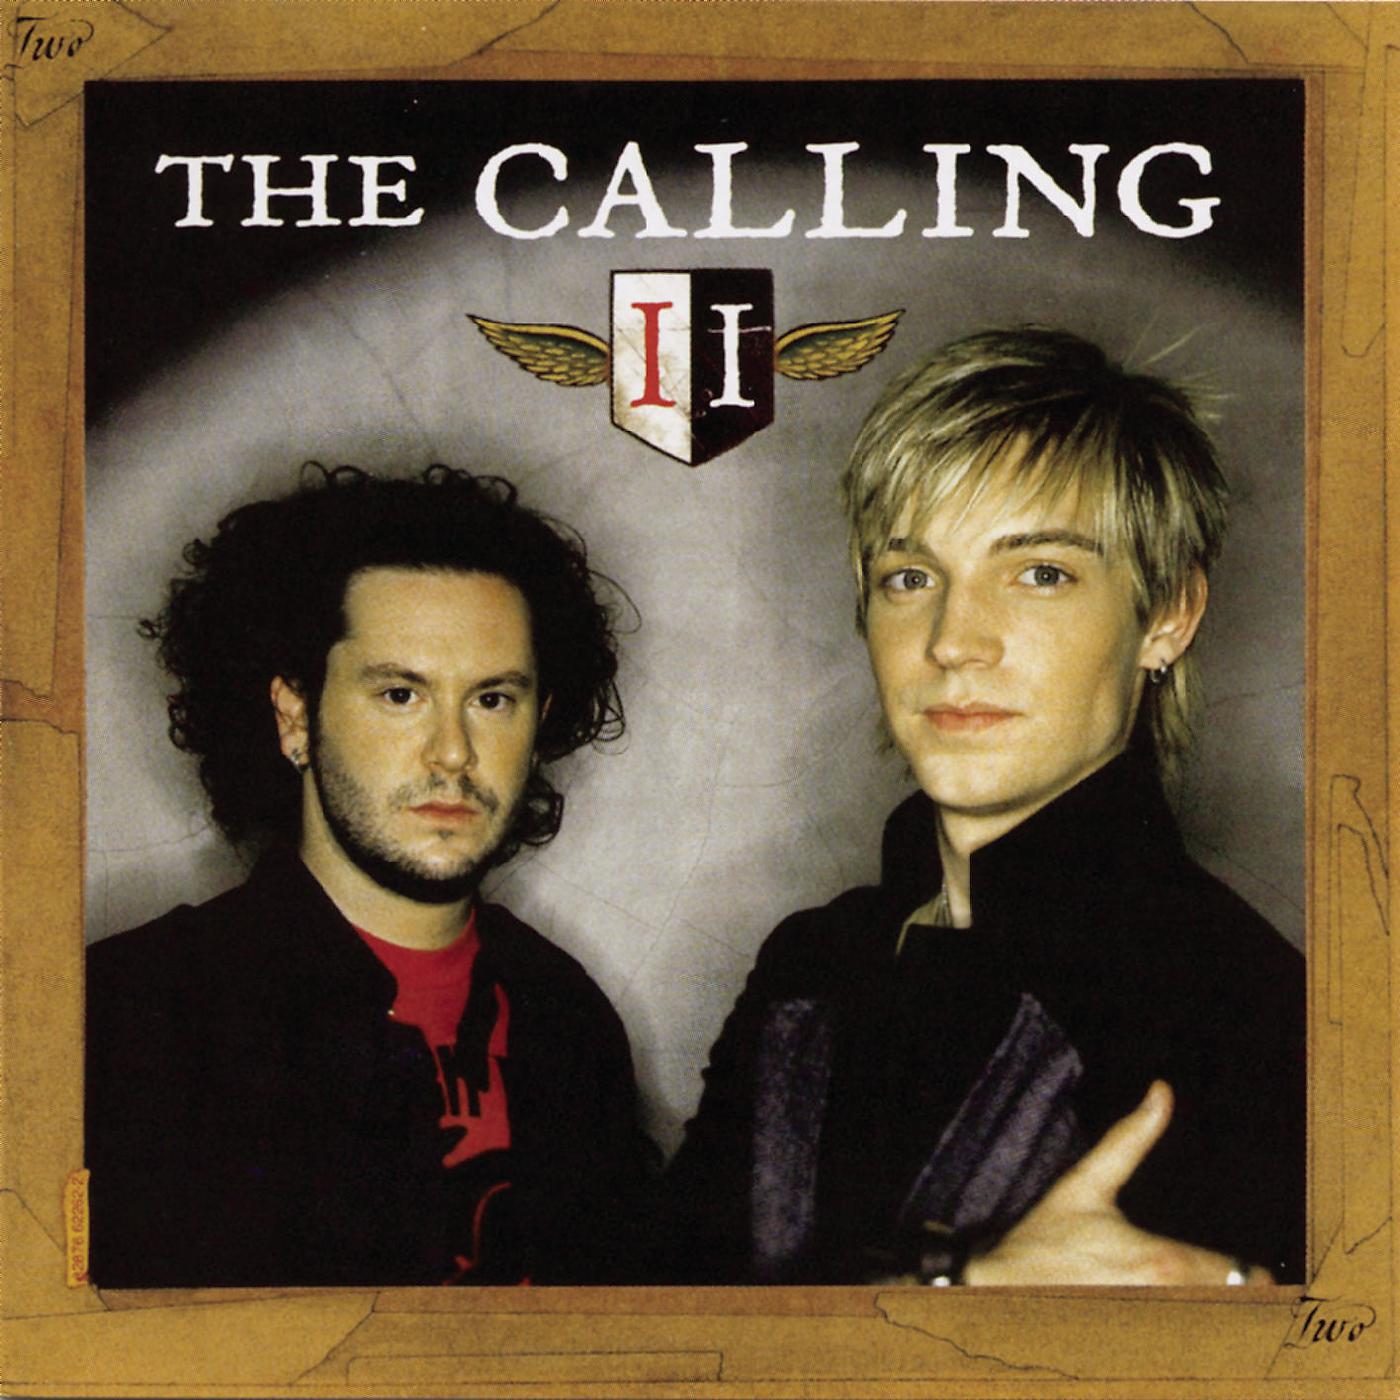 The calling series. The calling группа. The calling группа сейчас. CD. The Call. Зов. Группа the calling wherever you will go.